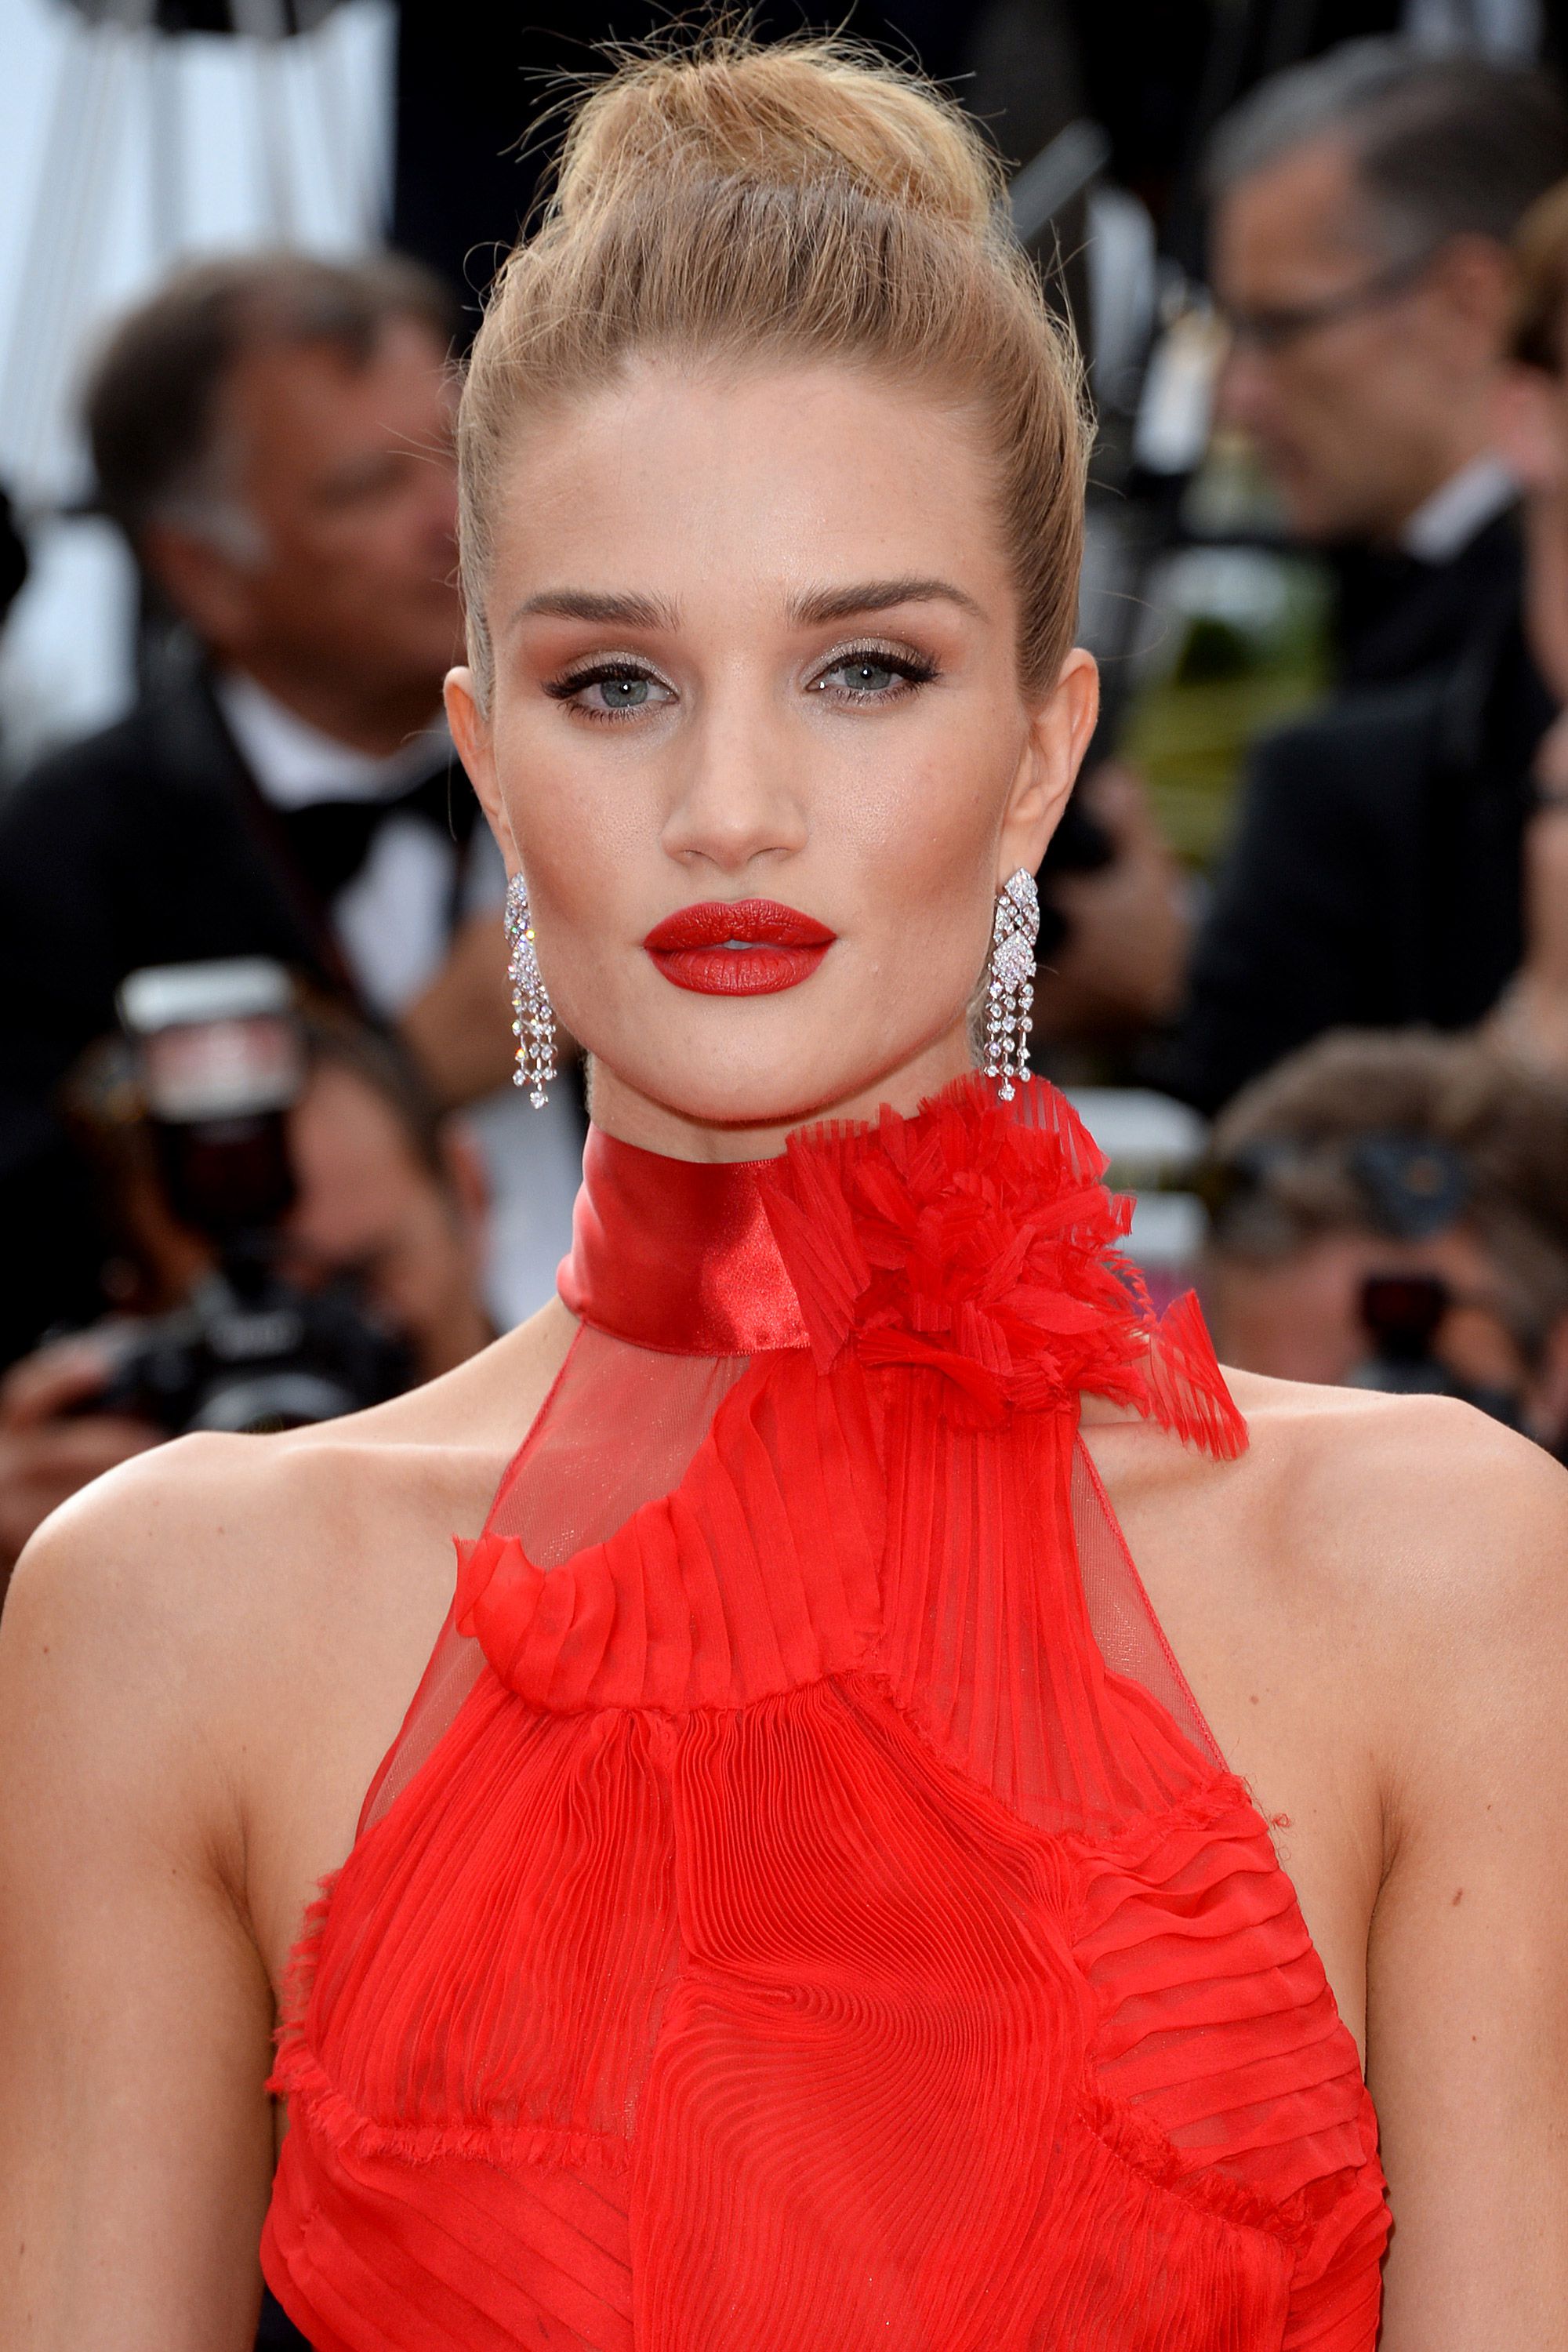 The Best Red Lip Looks of 2016 u2014 Celebrities Wearing Red Lipstick